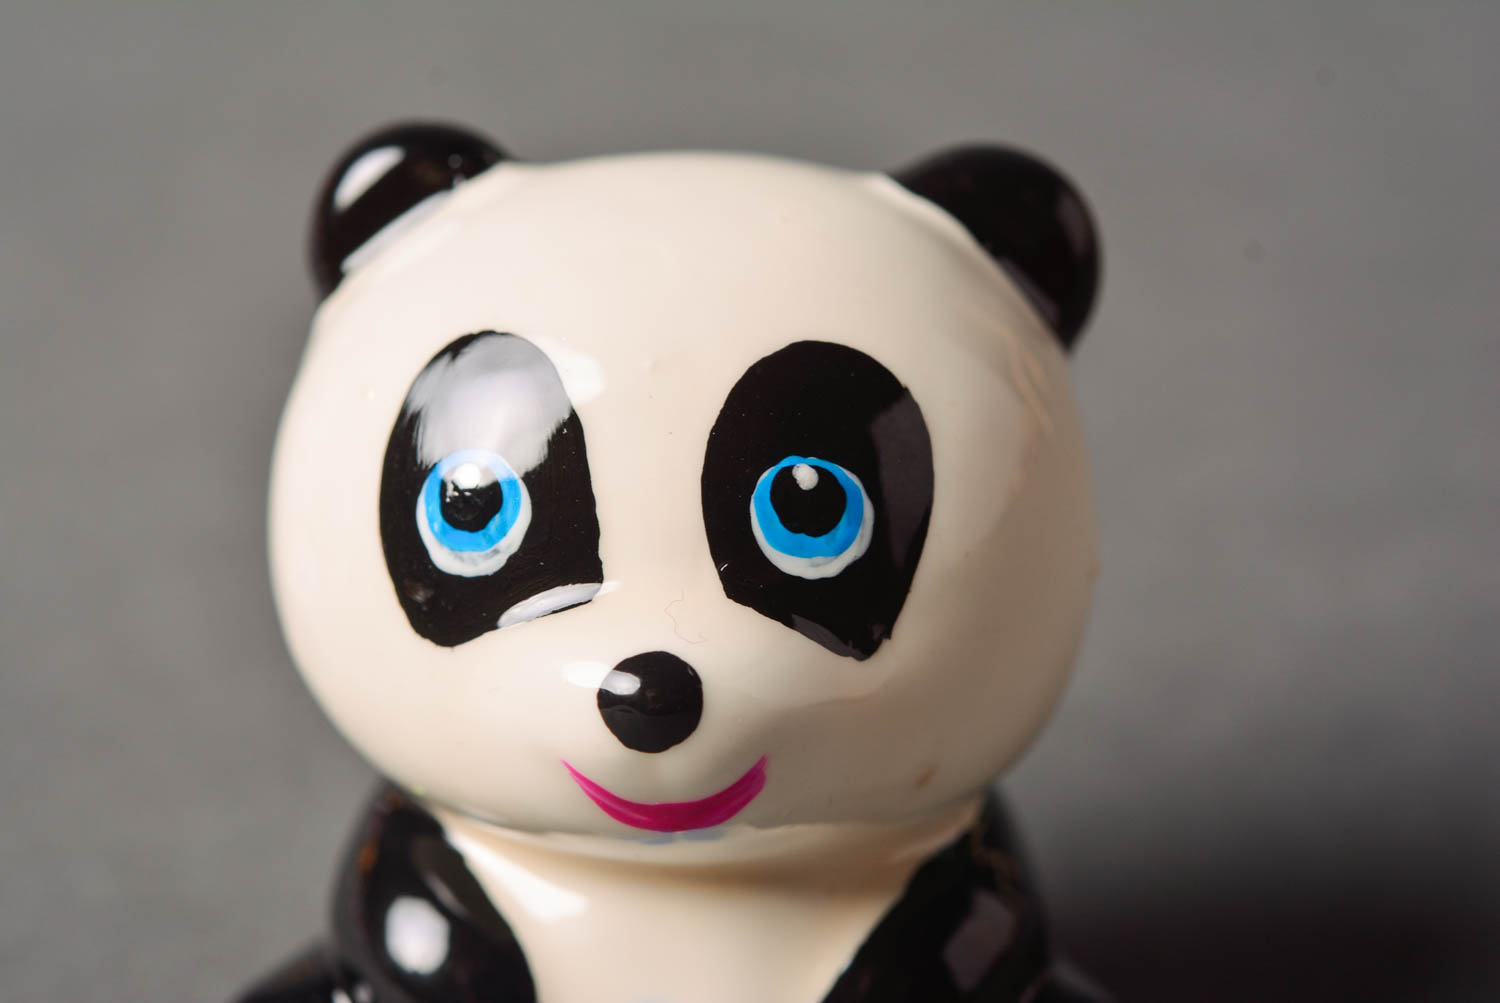 Handgefertigt Gips Figur Deko Wohnzimmer kreative Geschenkidee Panda foto 4